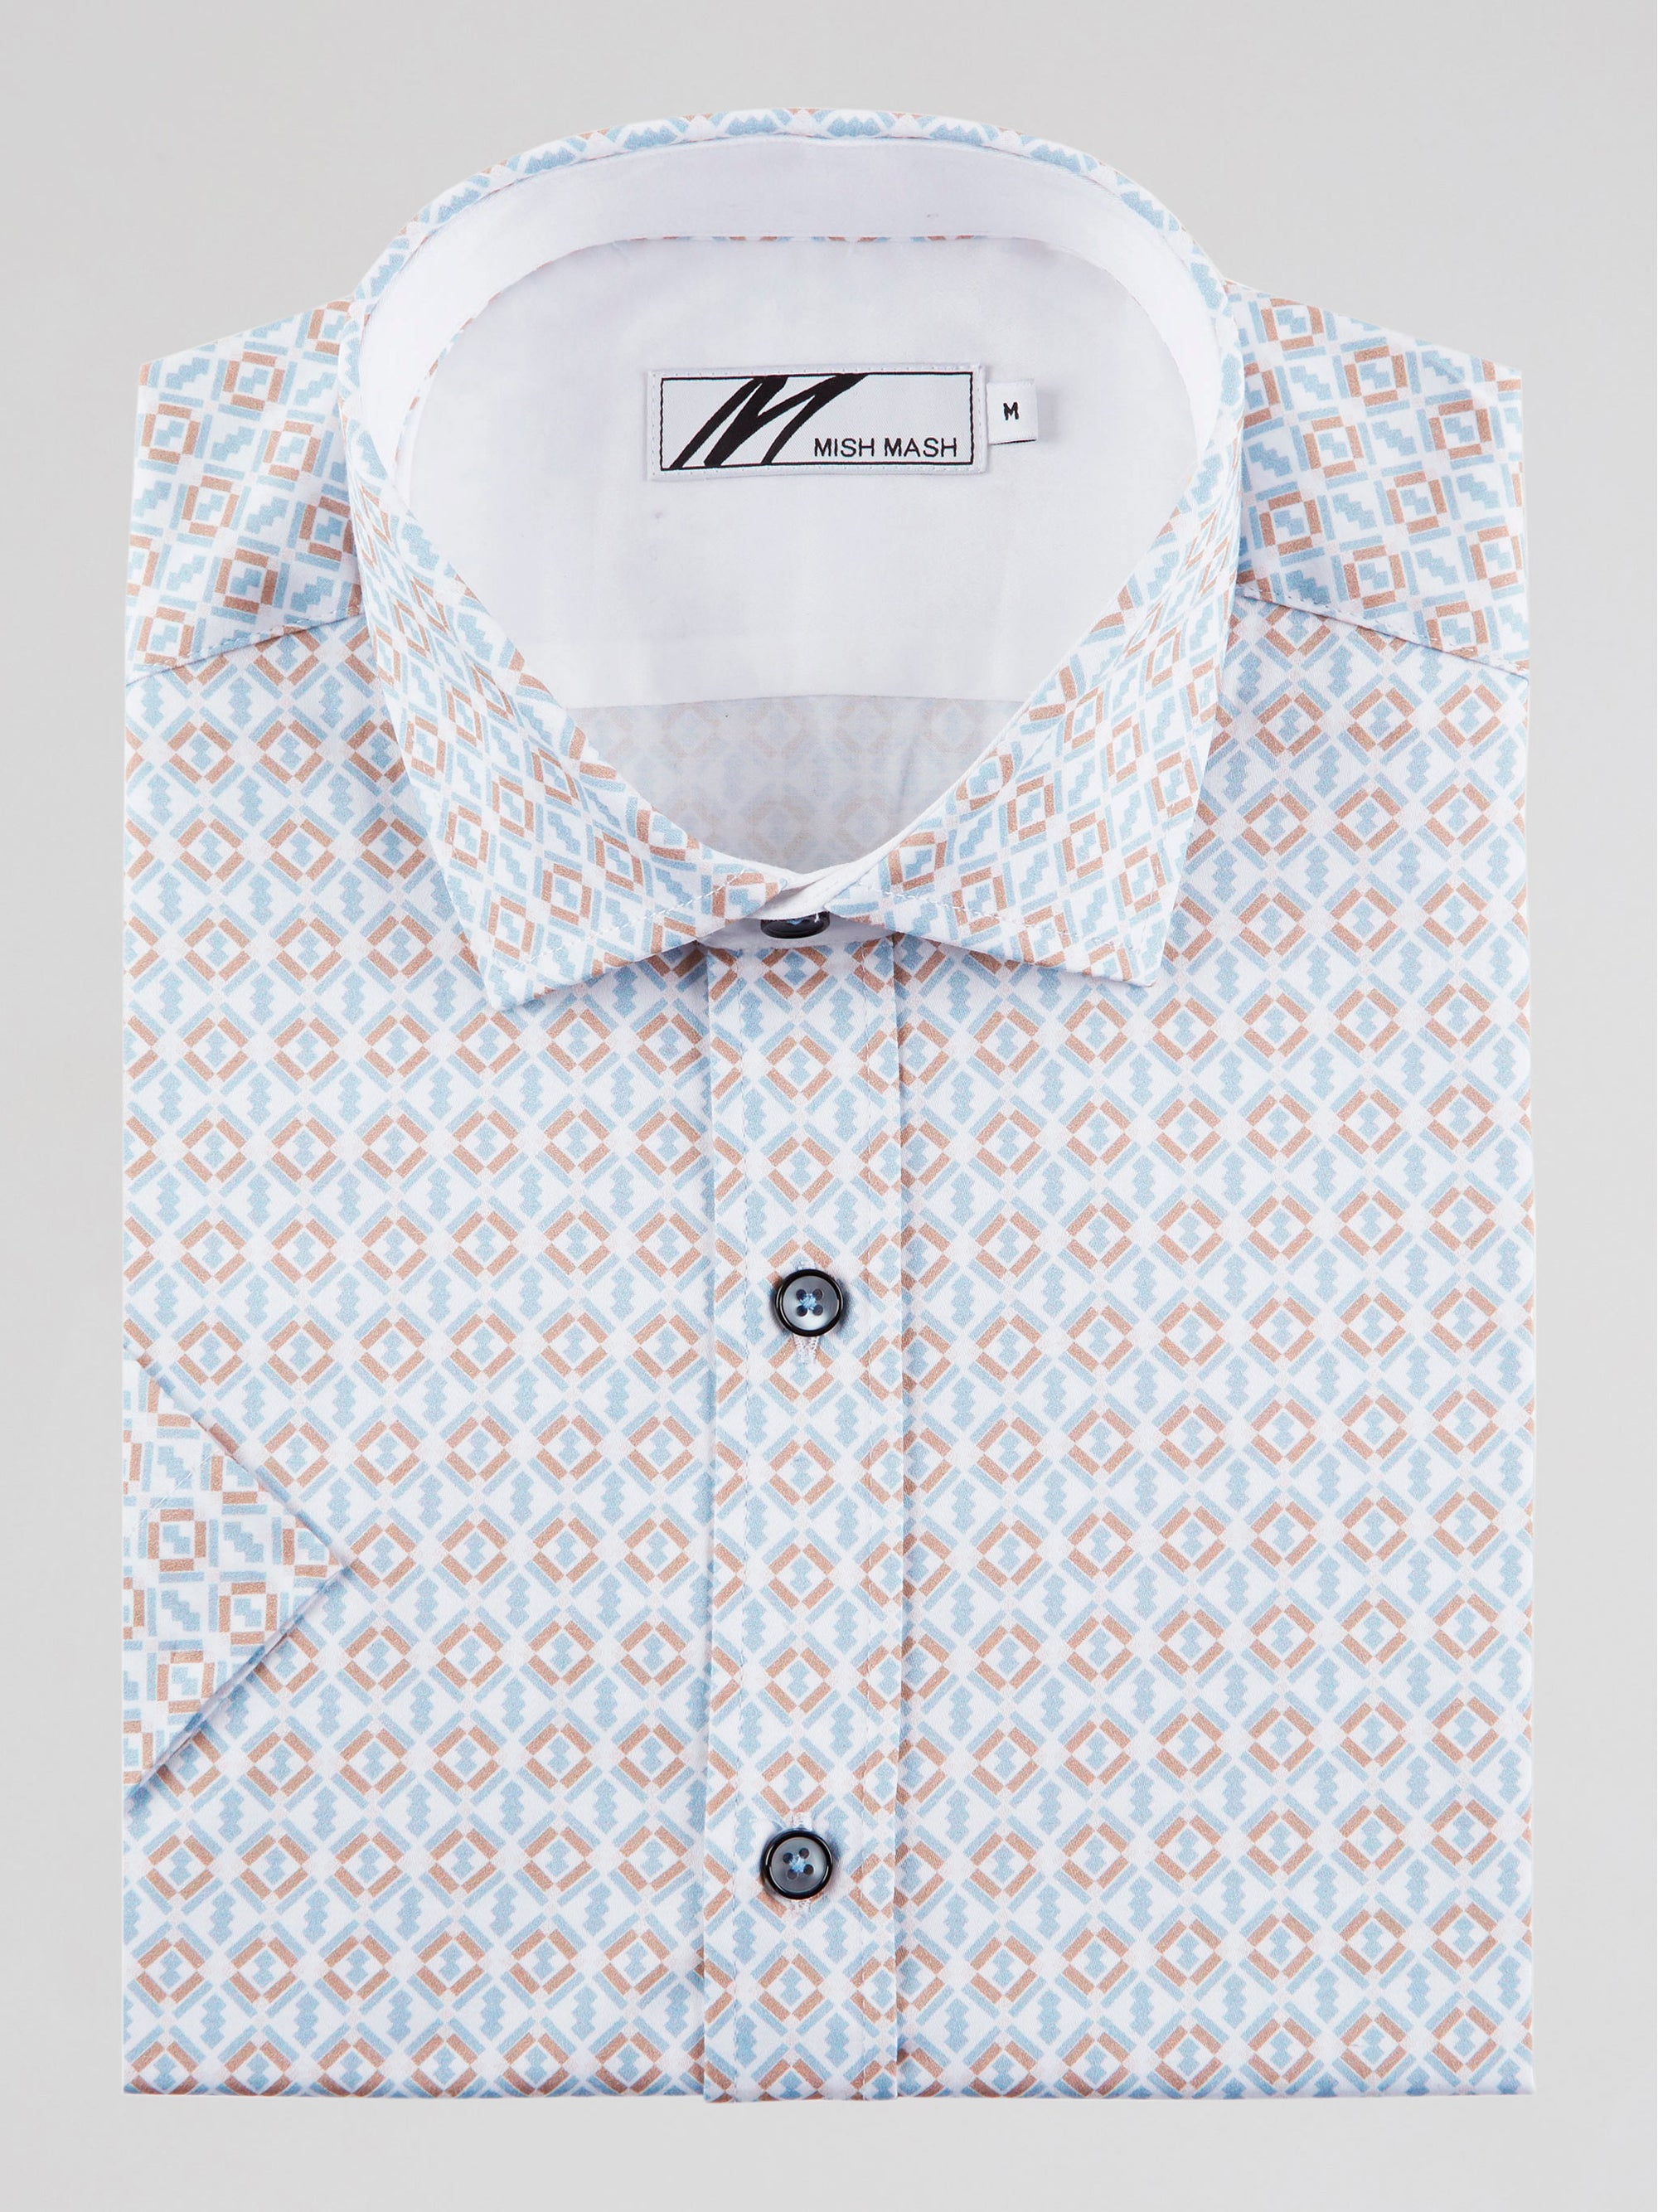 gazelle-white-printed-mens-smart-short-sleeve-shirt-mish-mash